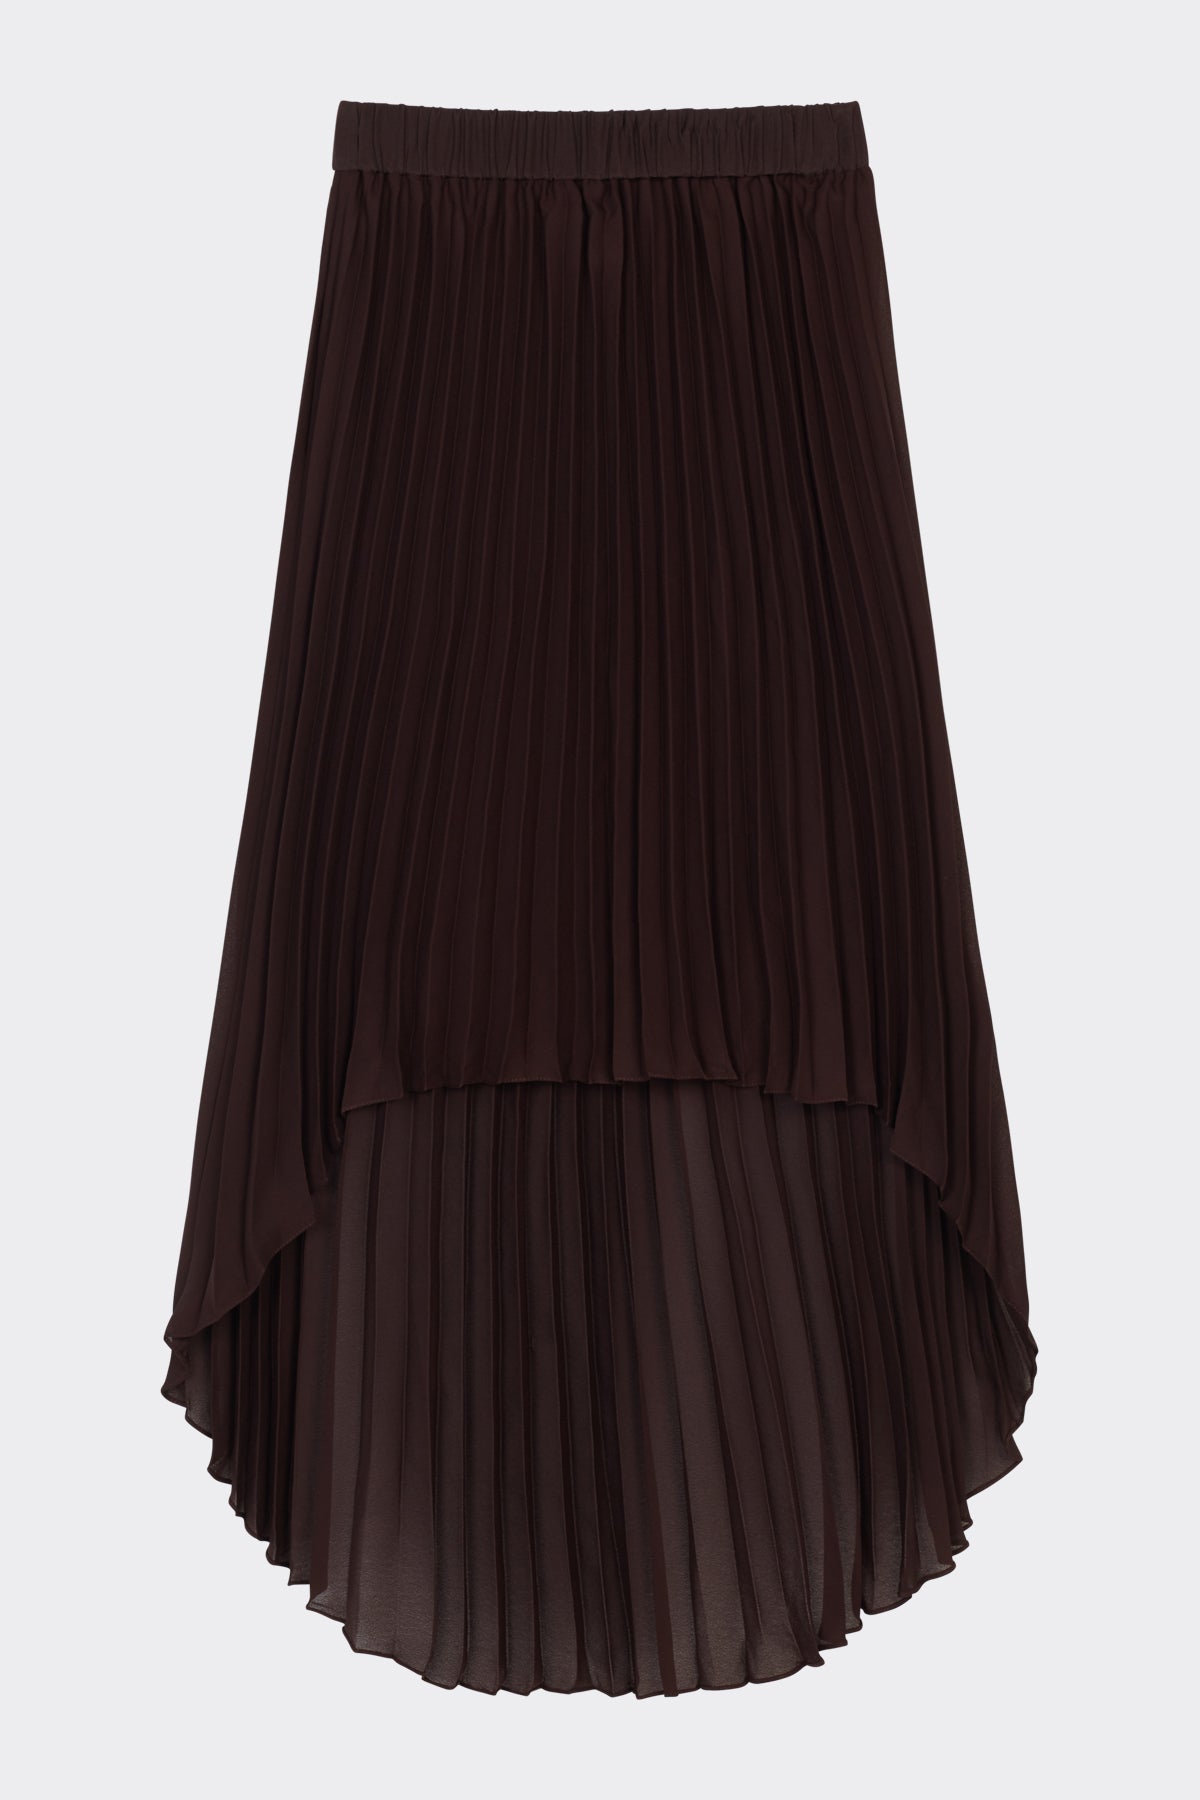 Coquette Skirt in Dark Brown| Noon by Noor